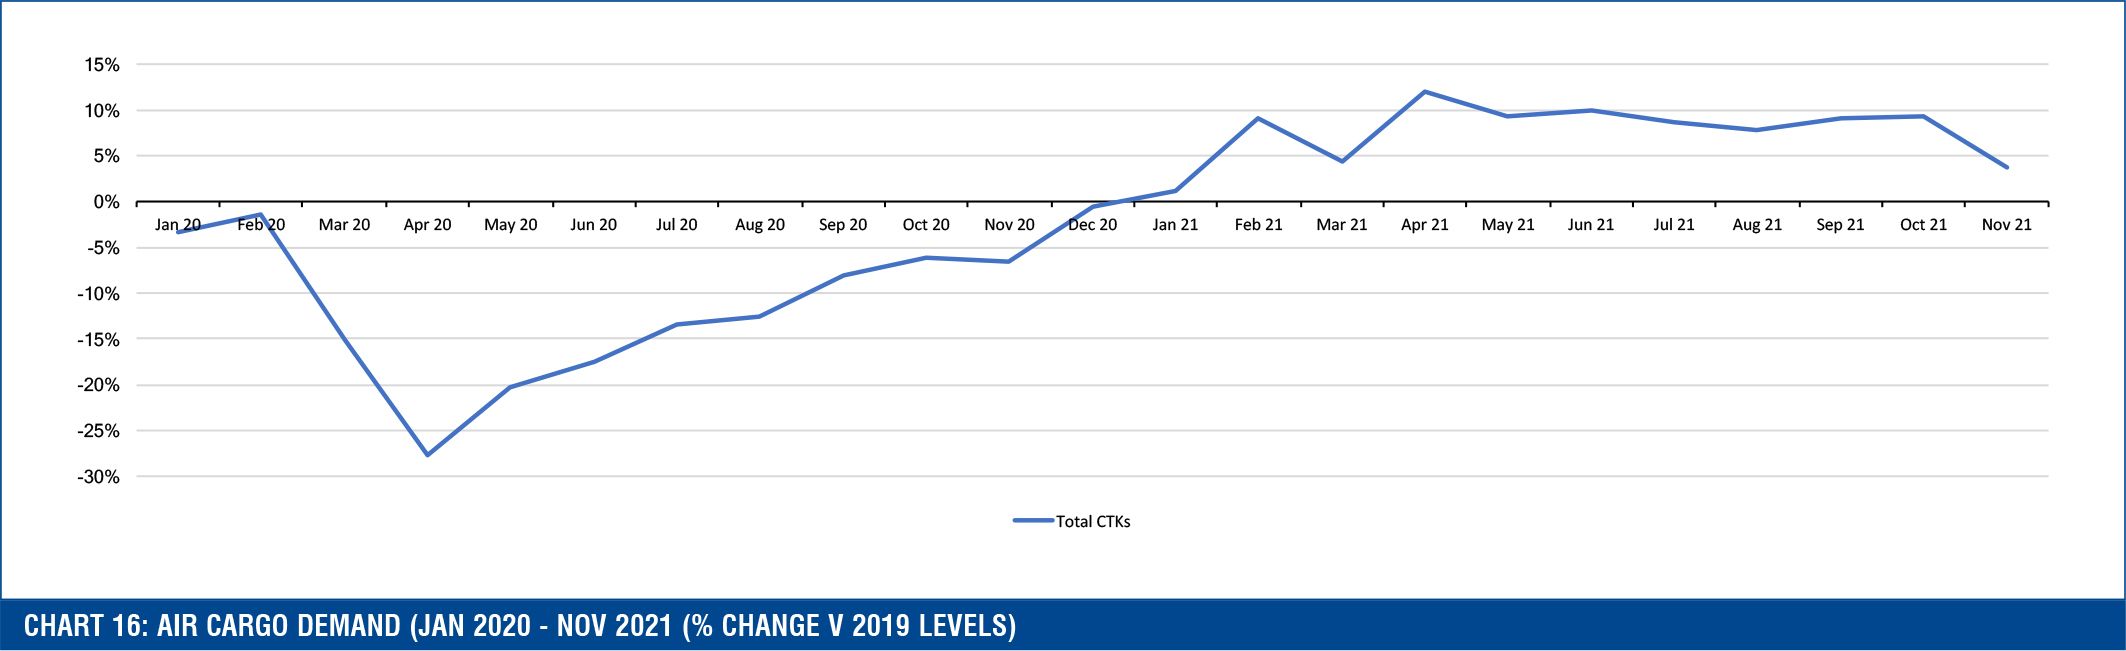 Chart 16: Air cargo demand Jan 2020 - Nov 2021 (% change against 2019 levels)